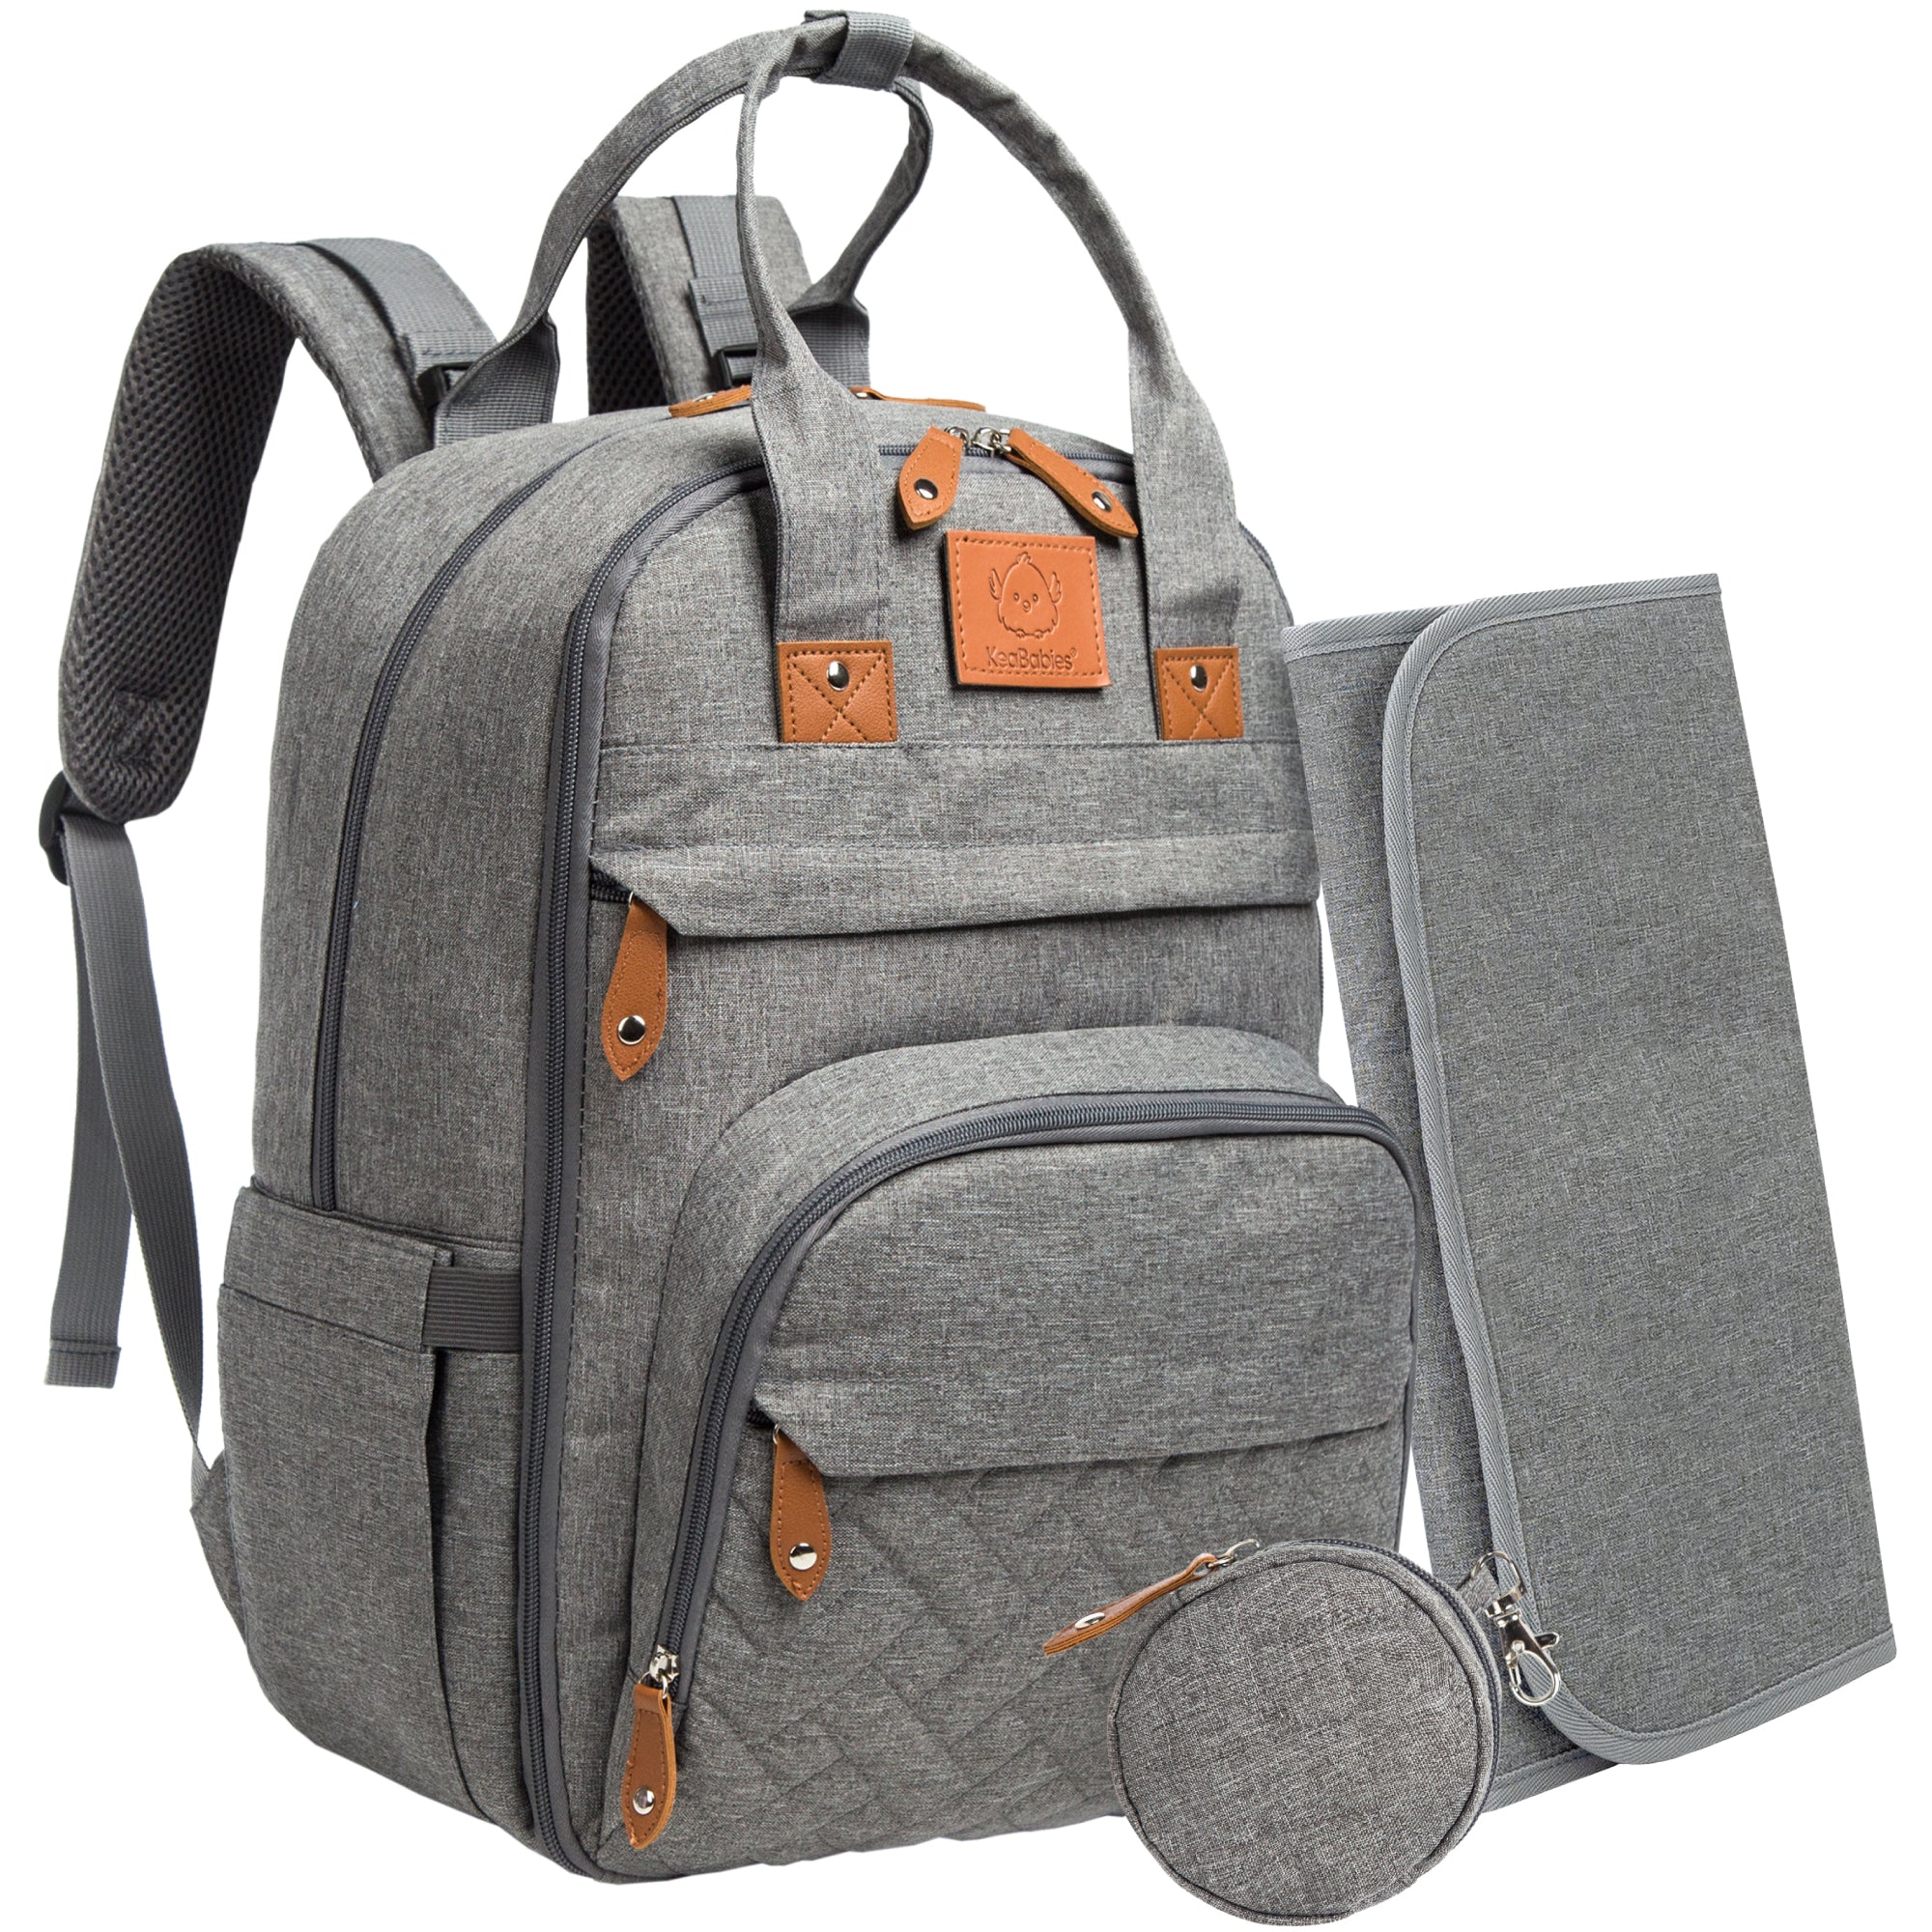 KeaBabies Original Diaper Bag Backpack, Multi Functional, Water-resistant,  Large Baby Bags for Girls, Boys (Pink Gray)